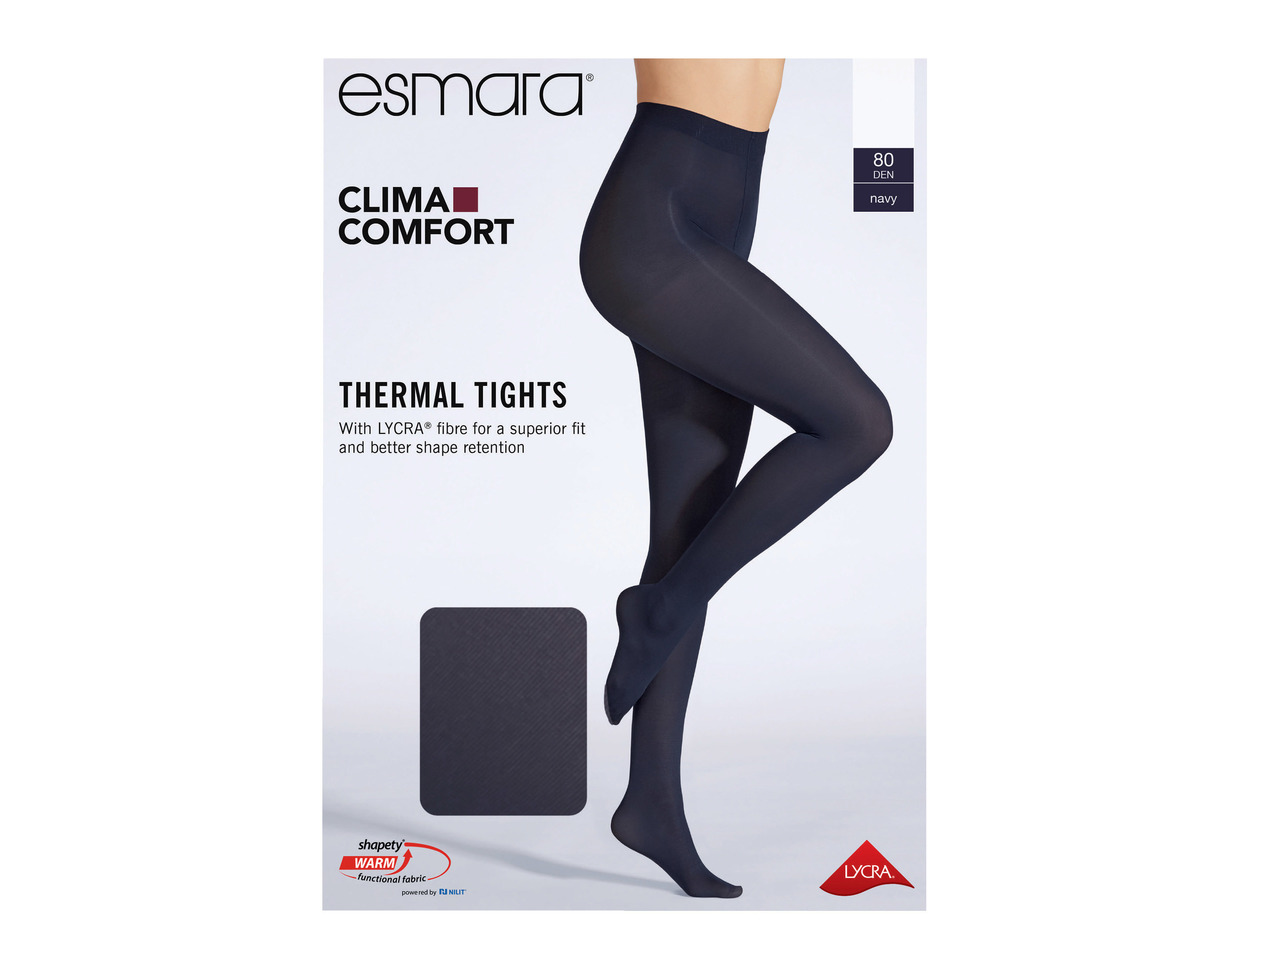 ESMARA Thermal Tights - Lidl — Ireland - Specials archive